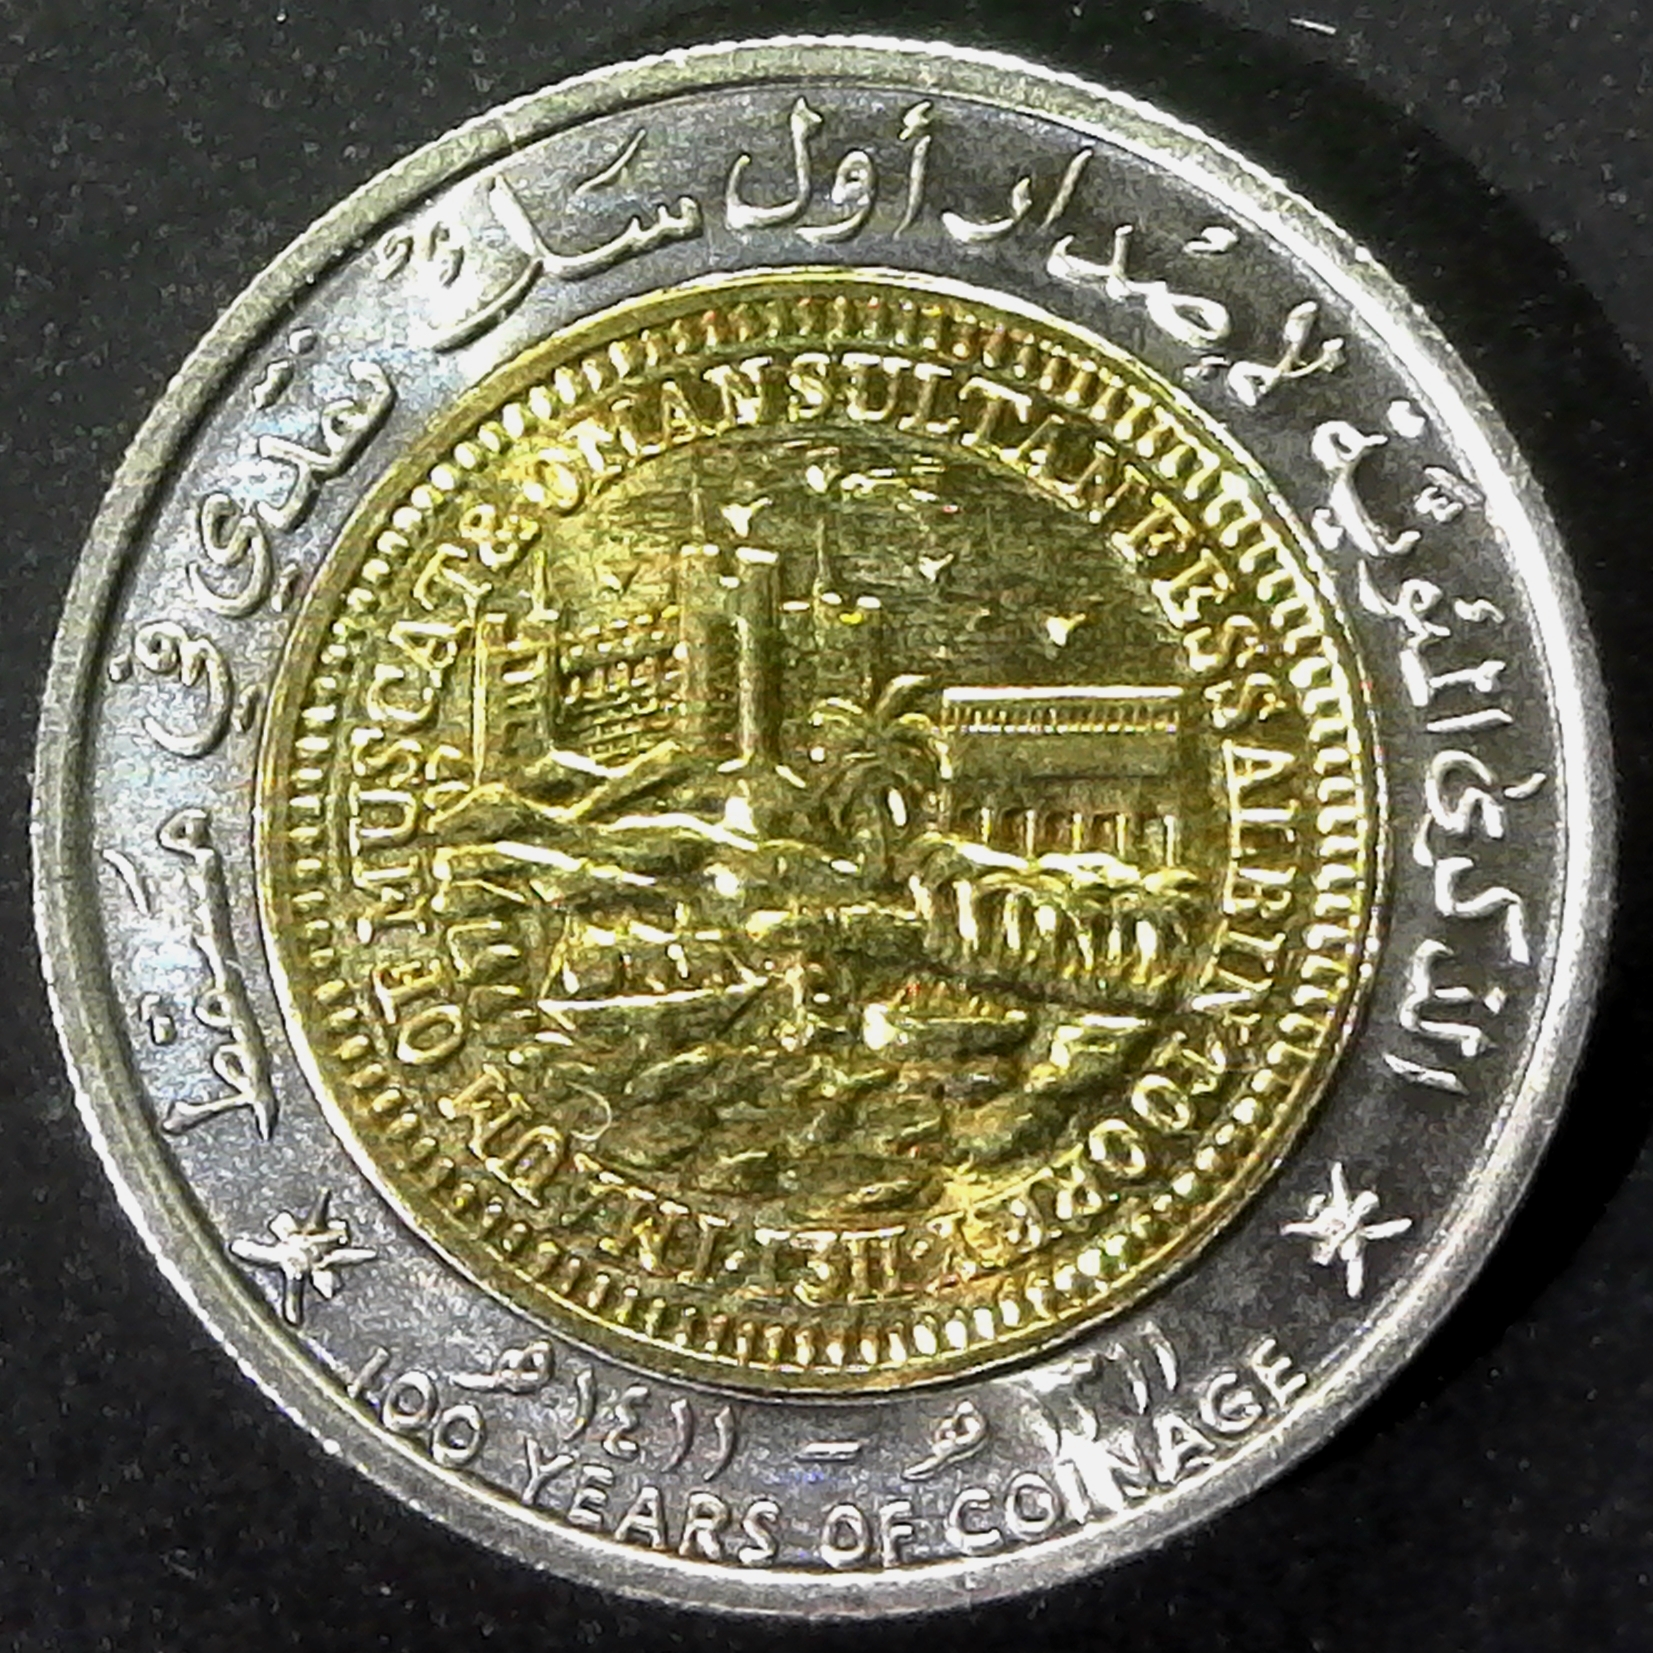 Oman 100 Baisa 1990 rev.jpg